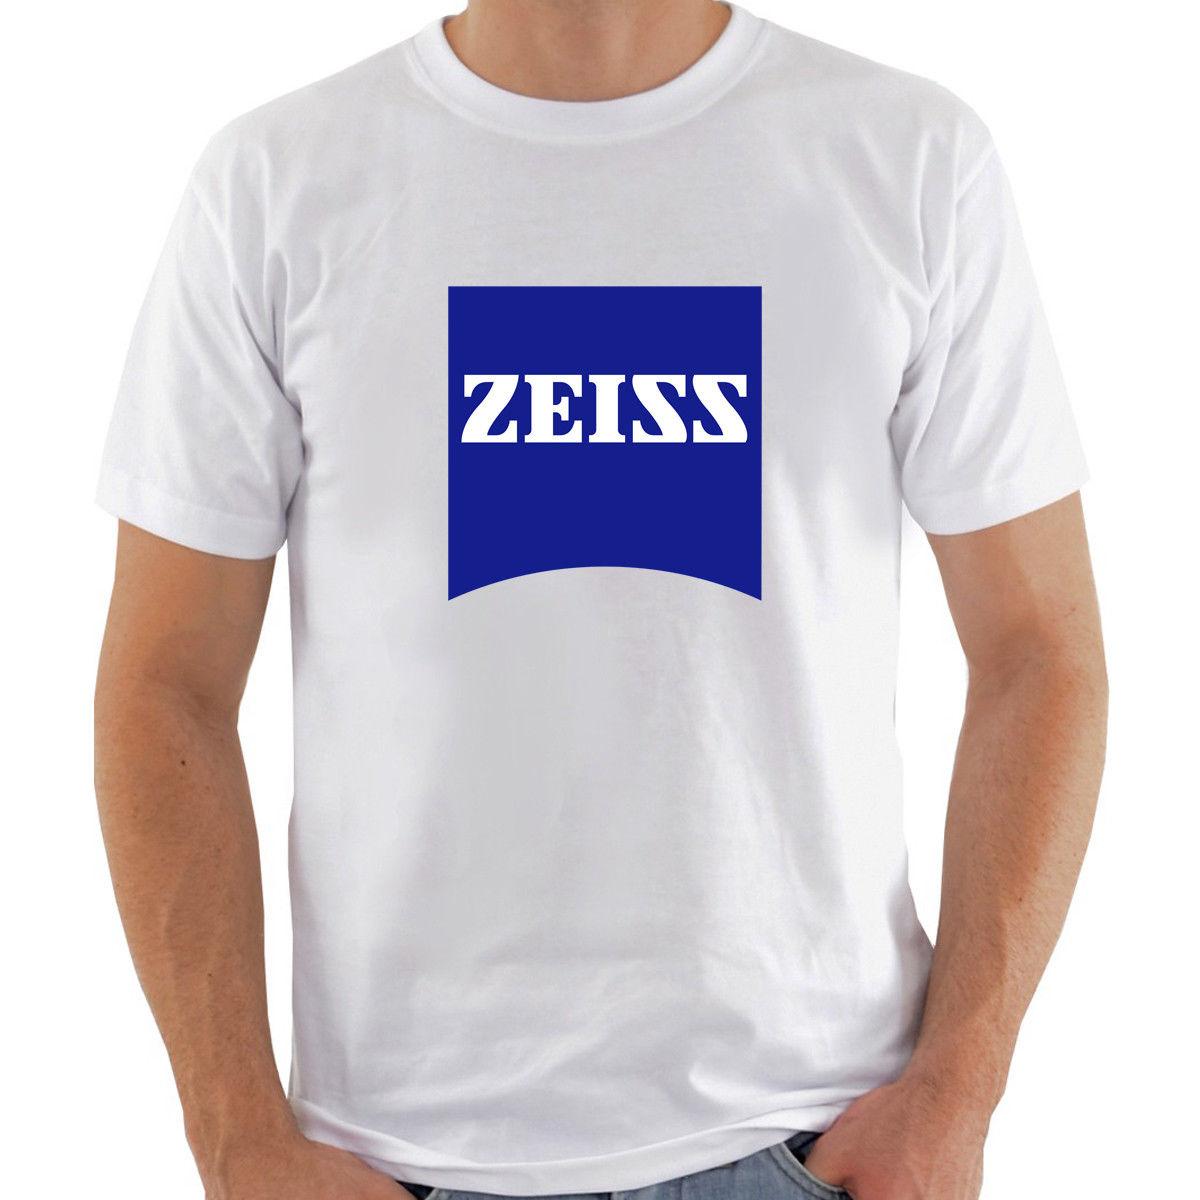 Zeiss Logo - ZEISS LOGO OPTICAL TECHNOLOGY Men White T Shirt 100% Cotton Graphic Tee 2018 New Men T Shirts Fashion 2018 New Men Tee